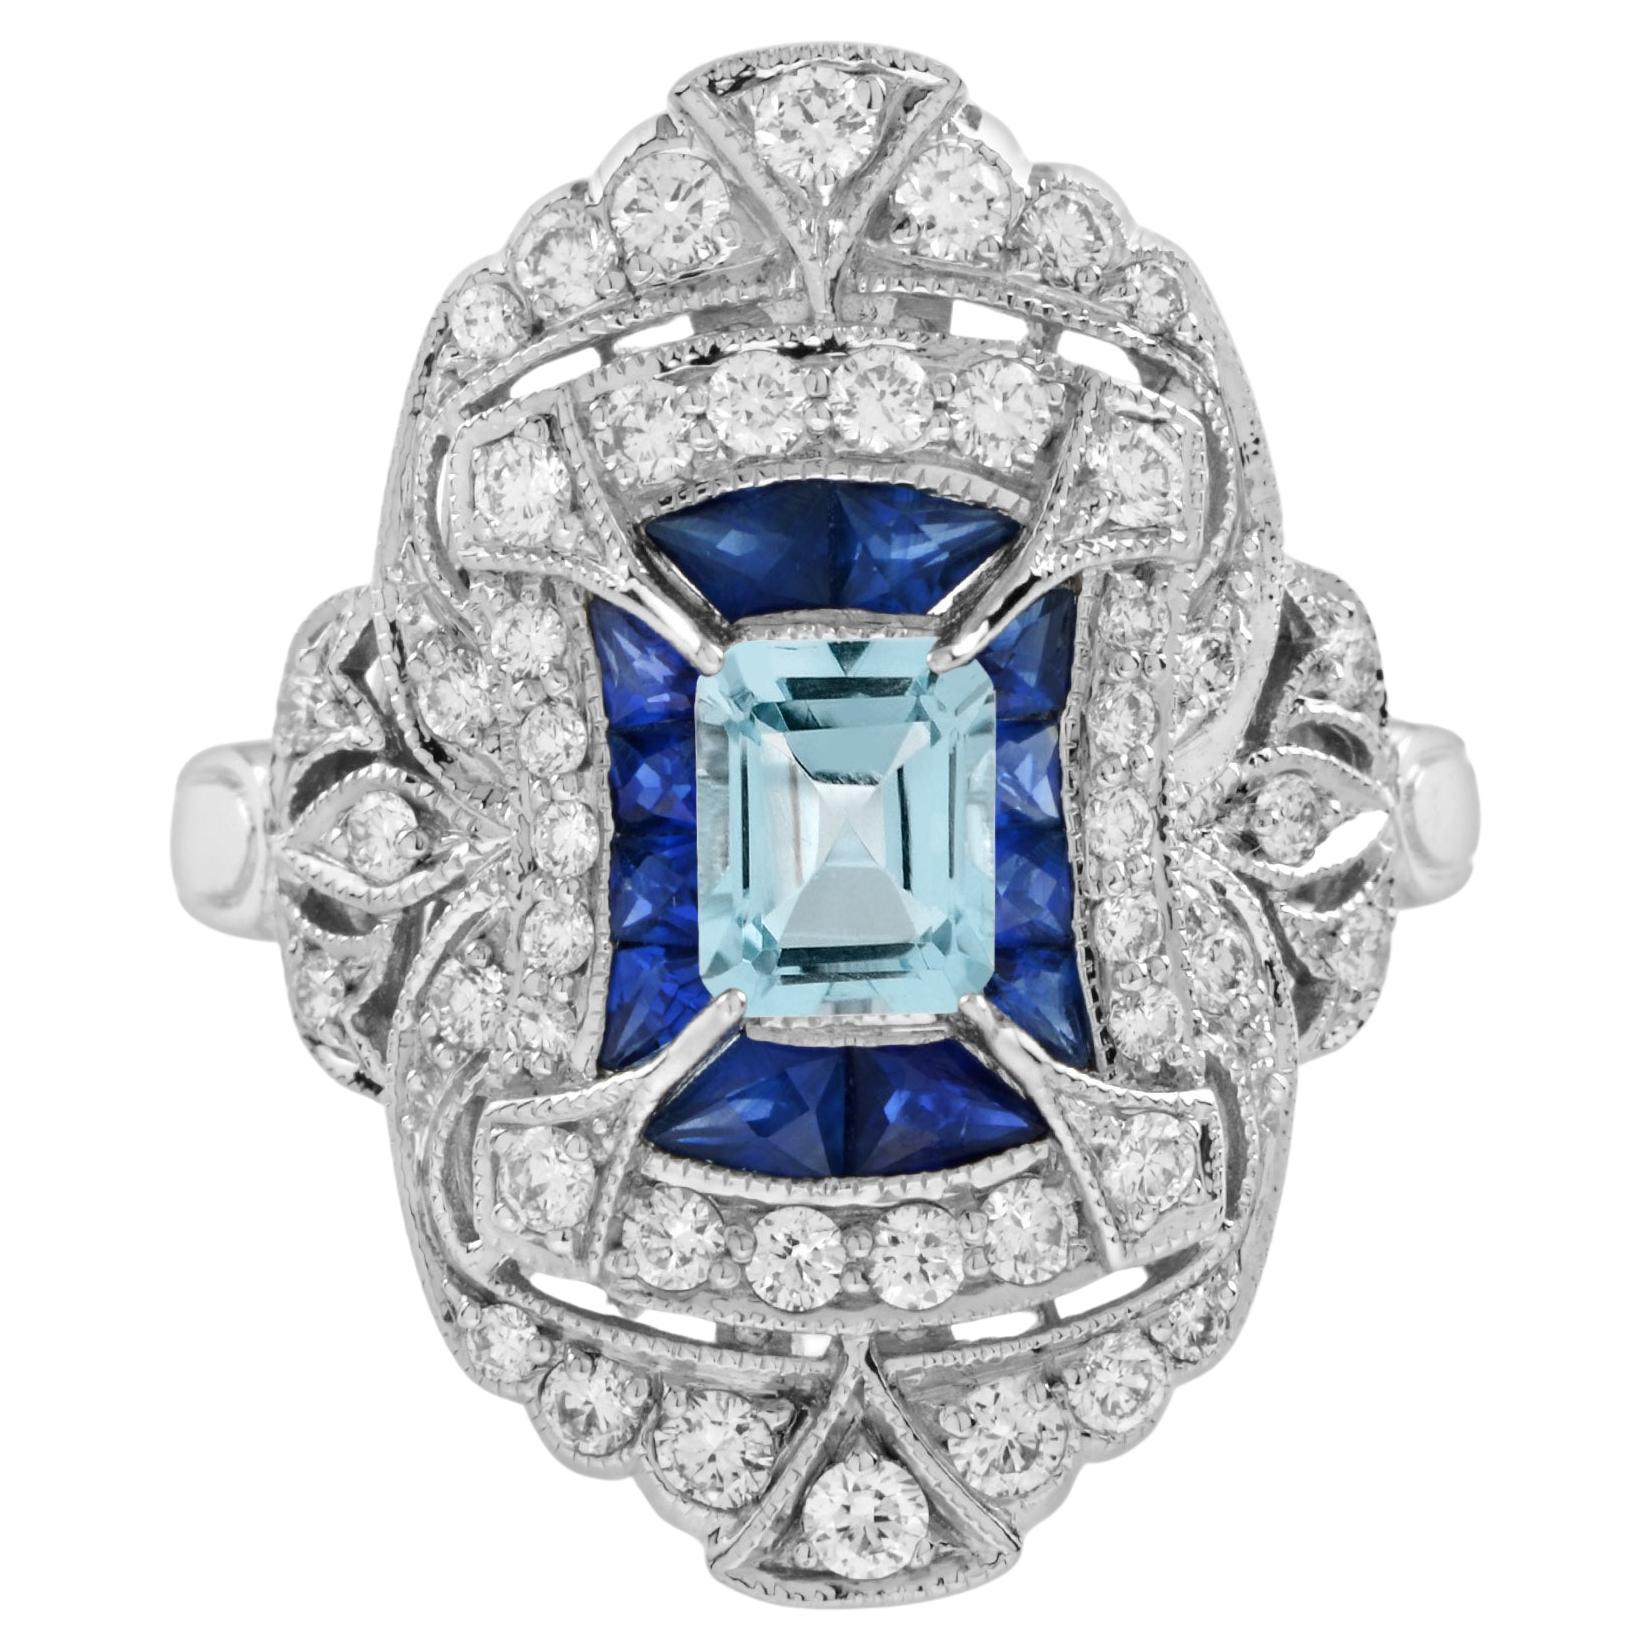 Aquamarine Blue Sapphire Diamond Art Deco Style Dinner Ring in 18K White Gold